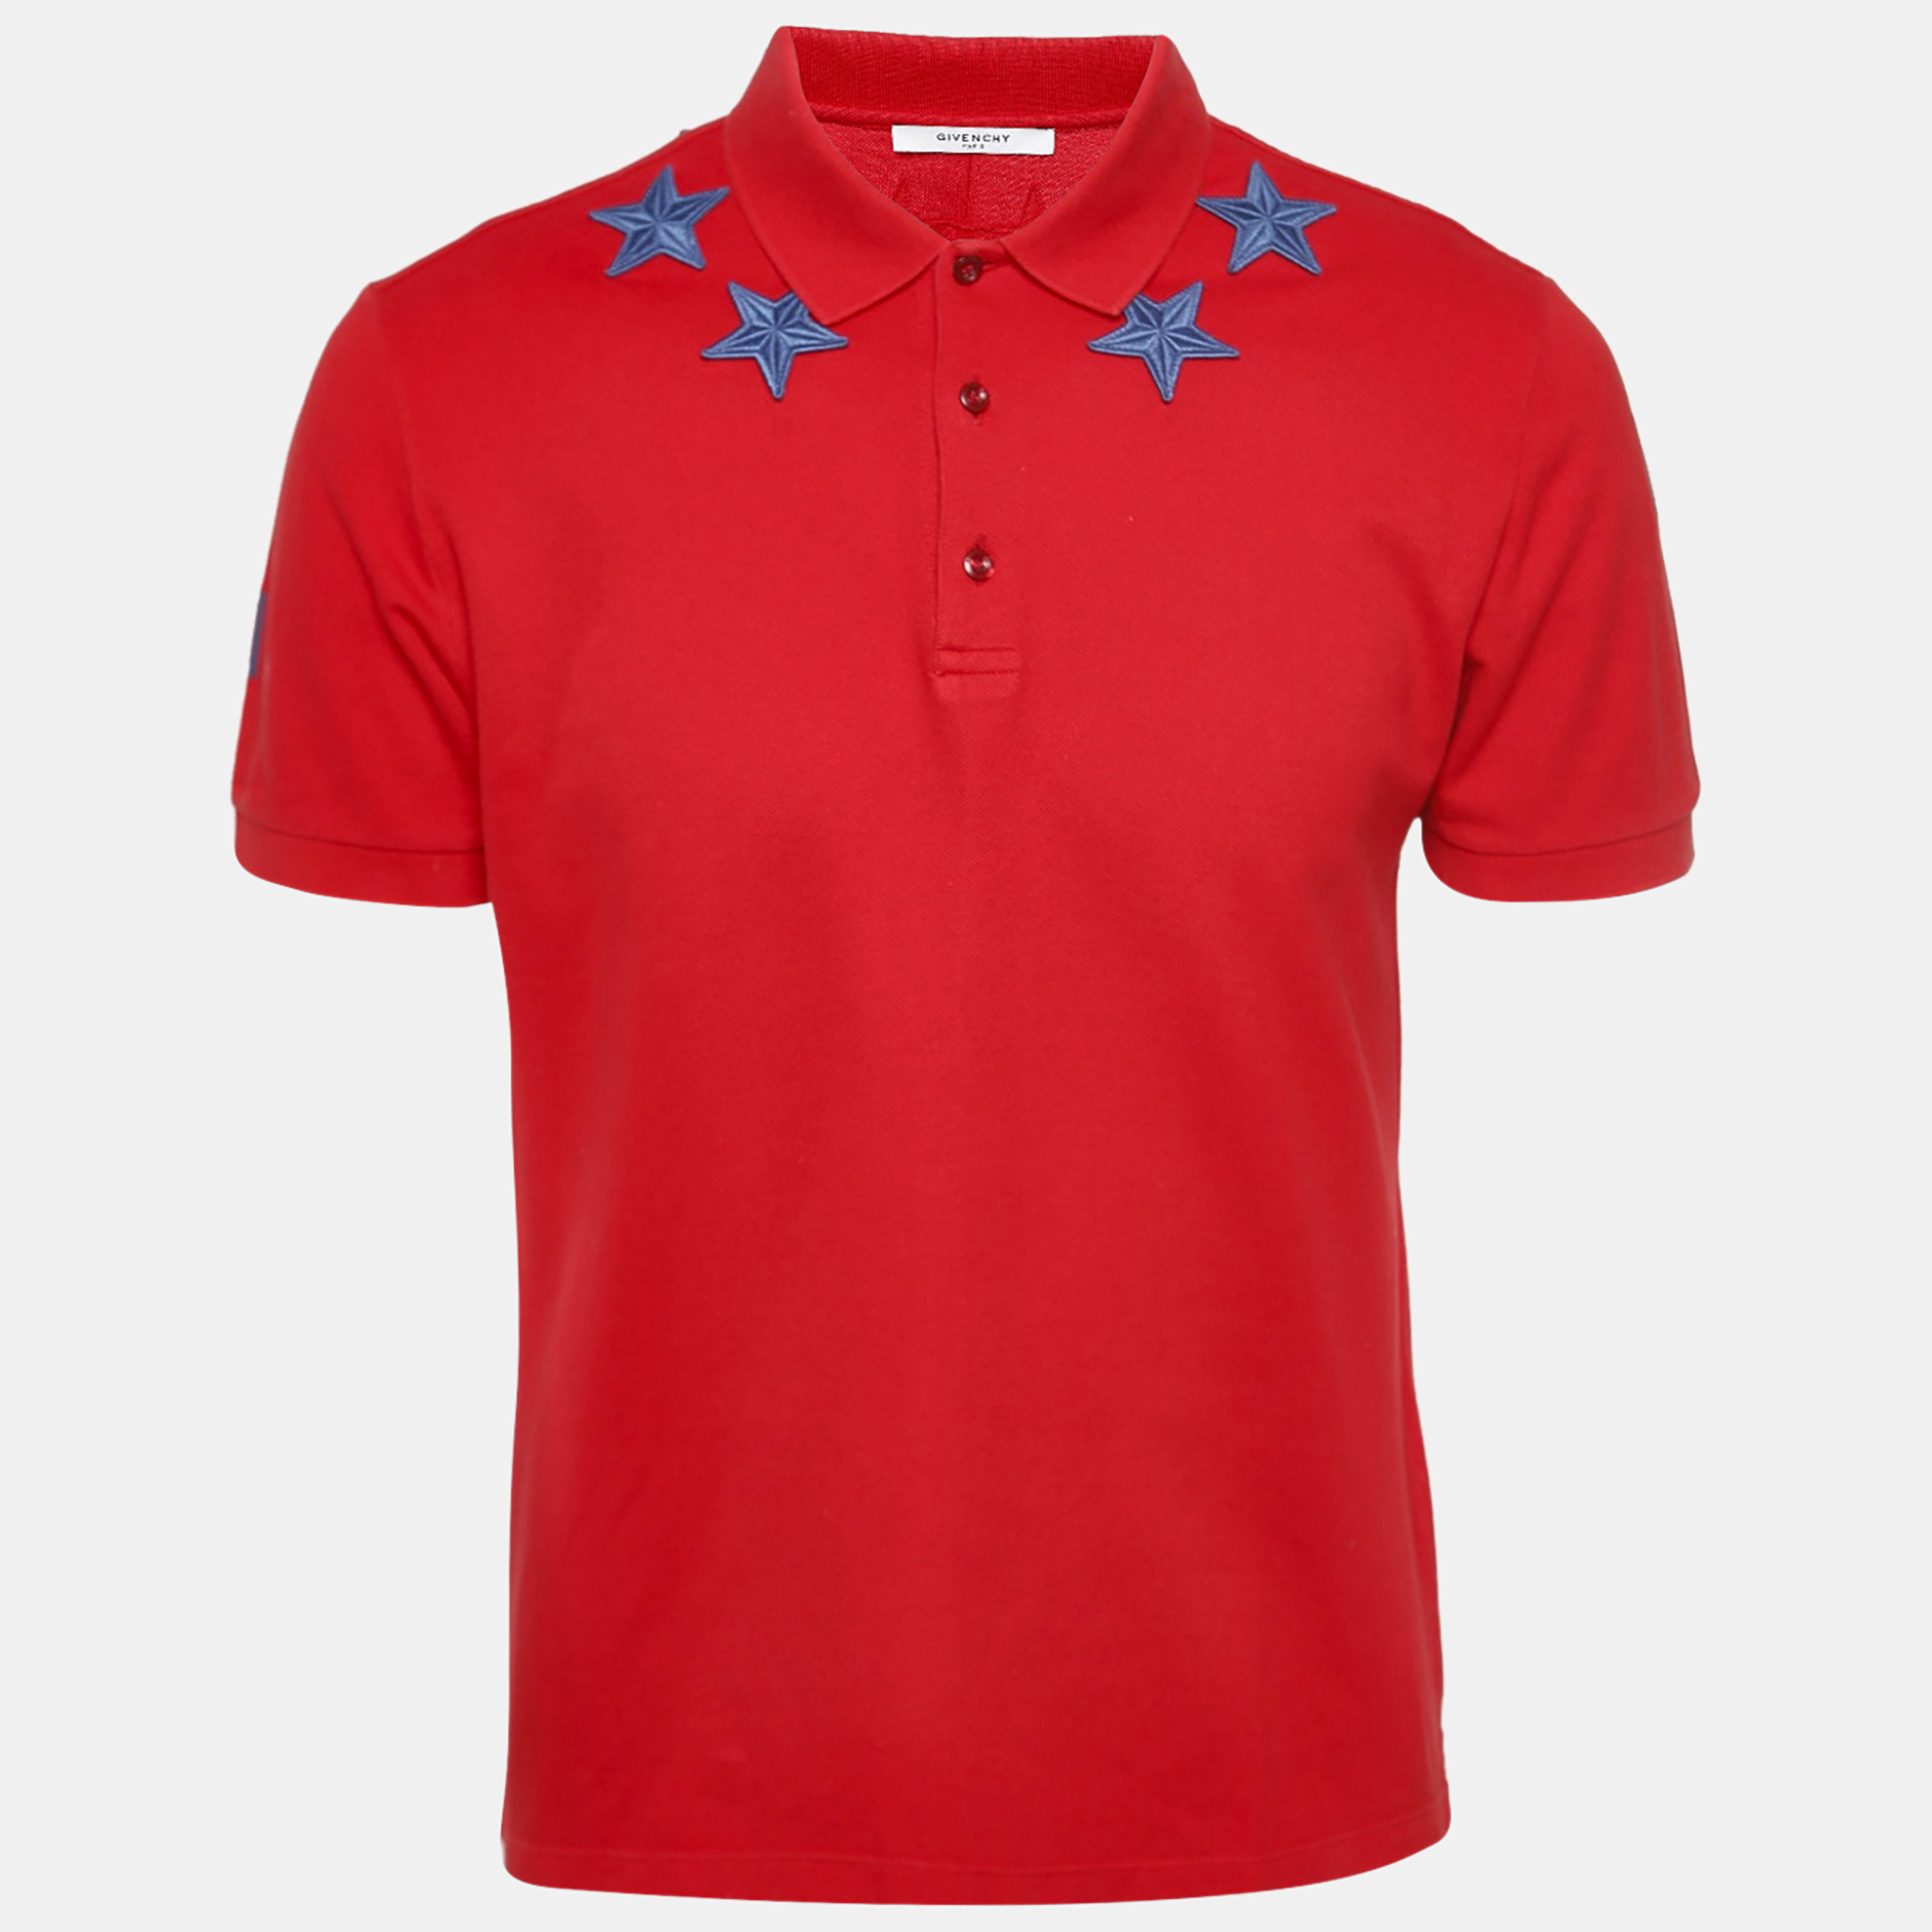 

Givenchy Red Star Applique Cotton Pique T-Shirt